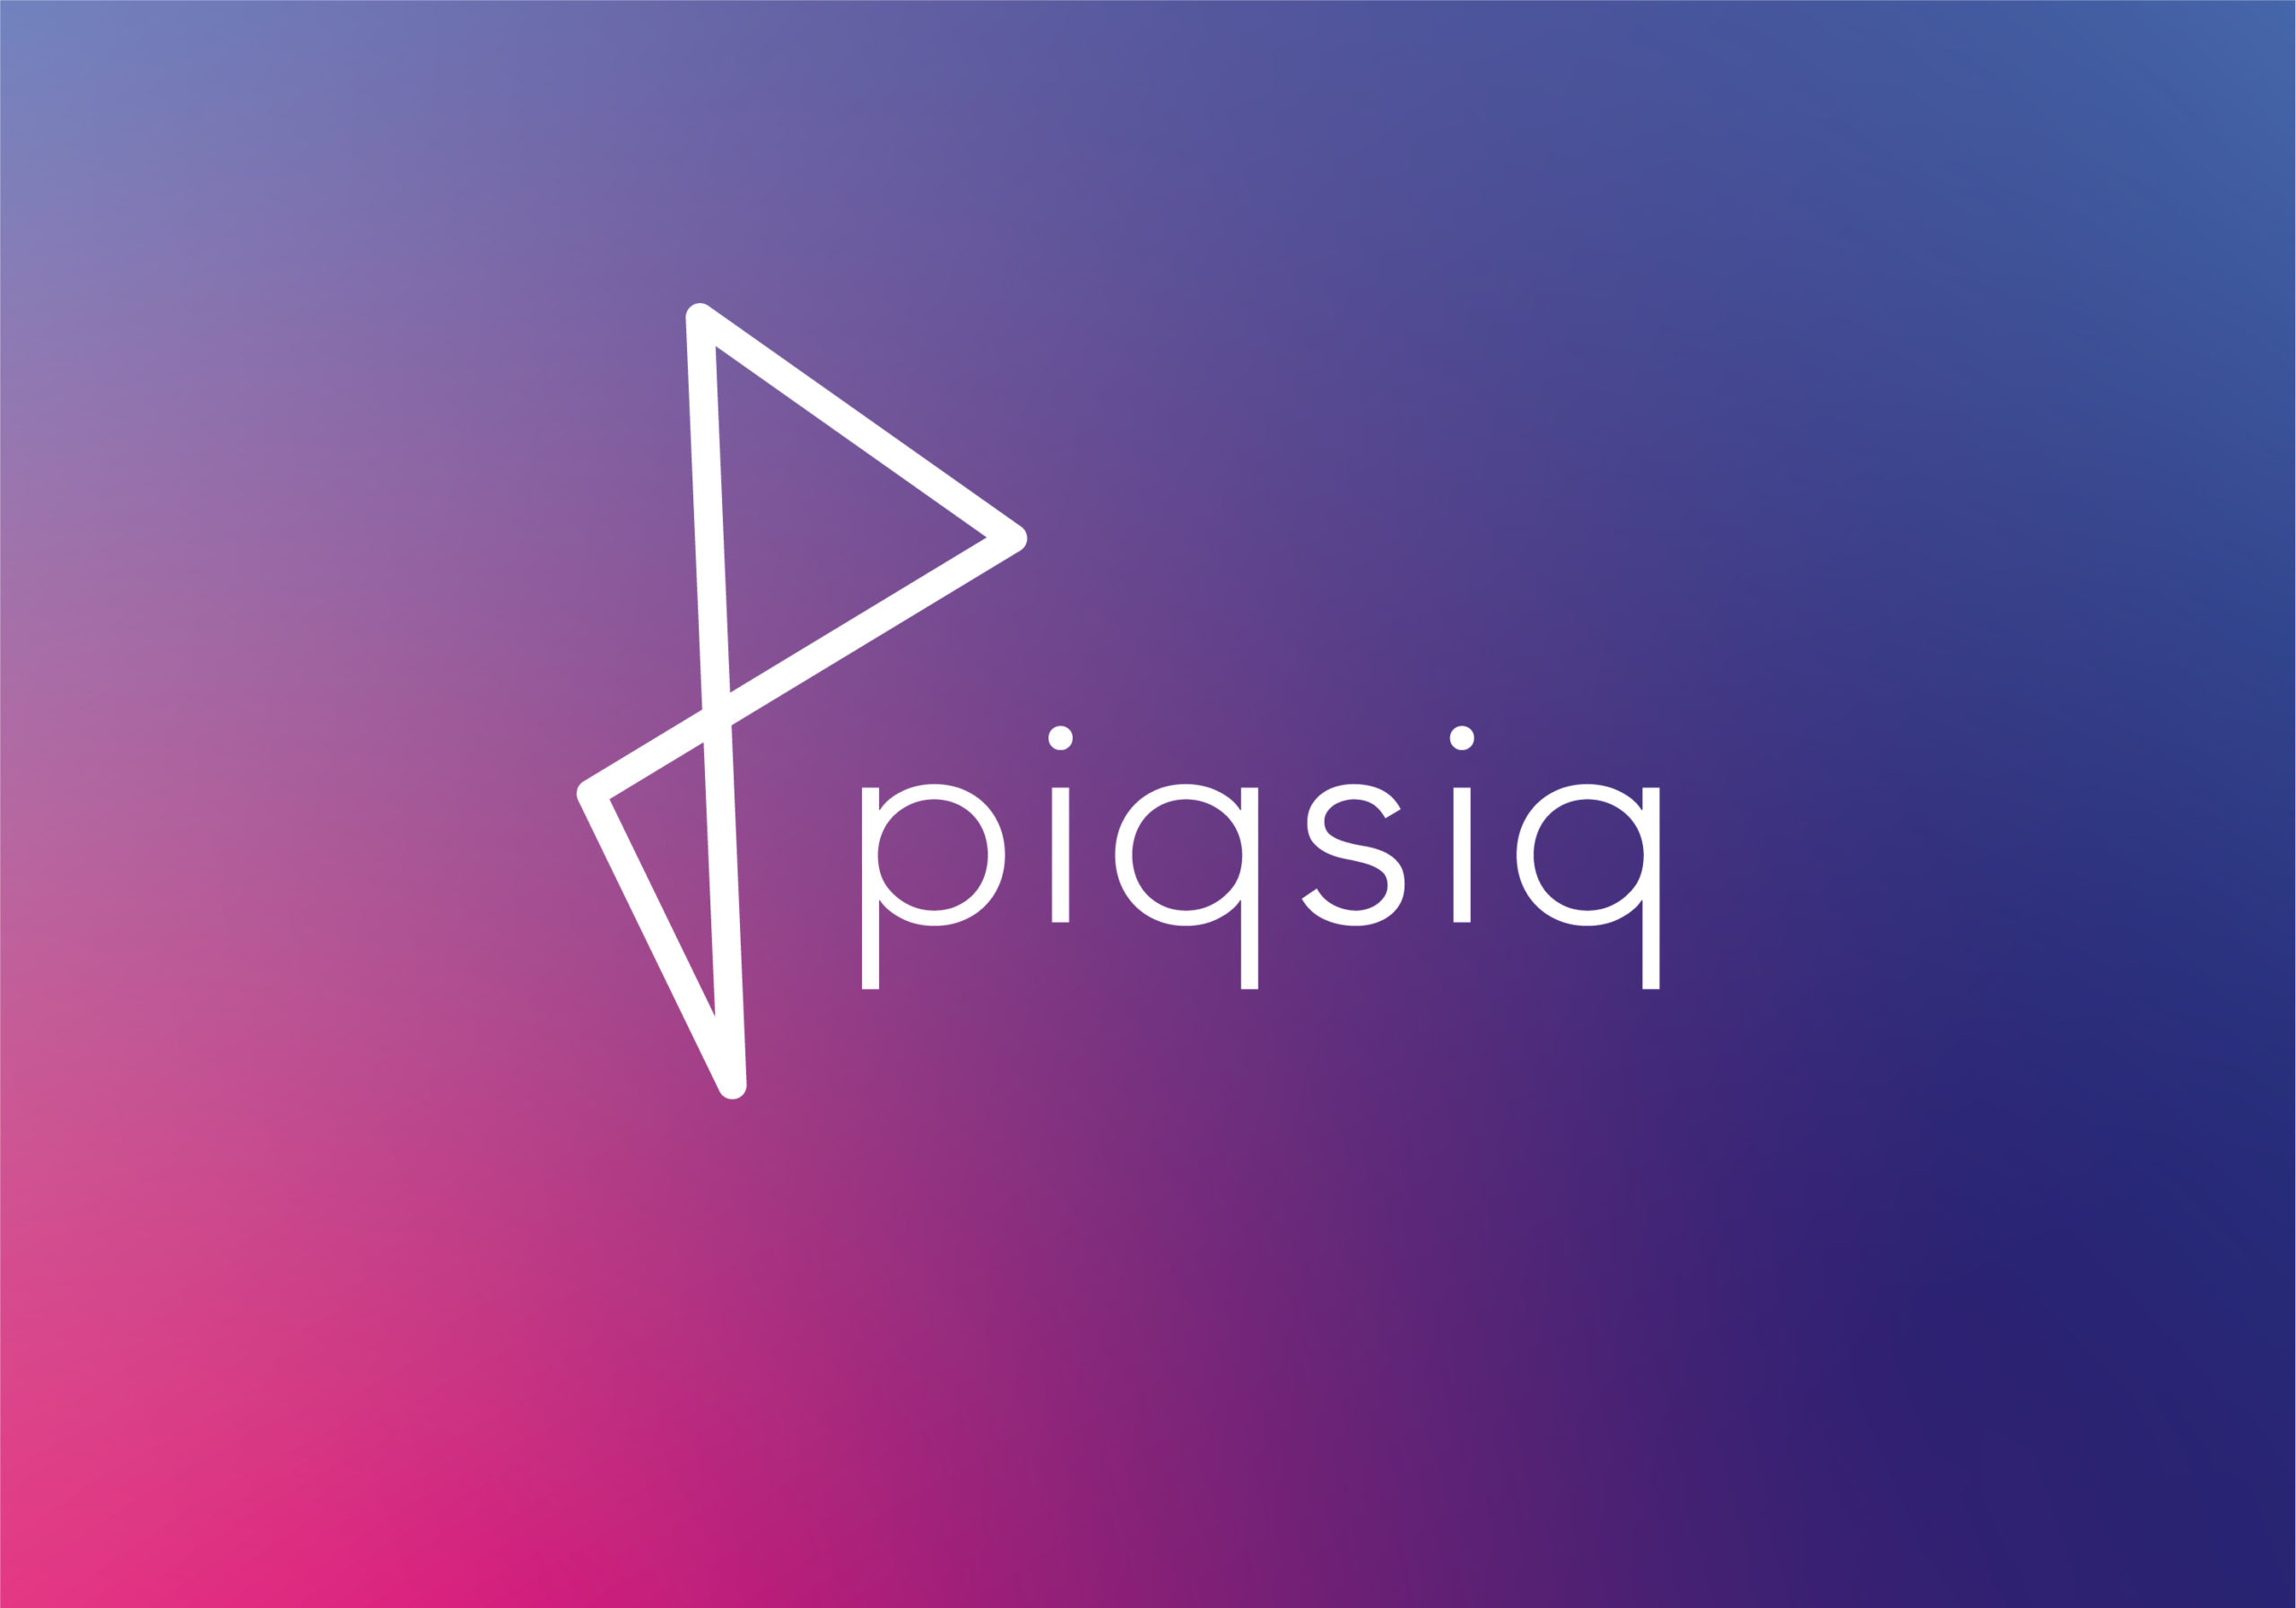 Piqsiq Logo. Design by Annick & Yannick.